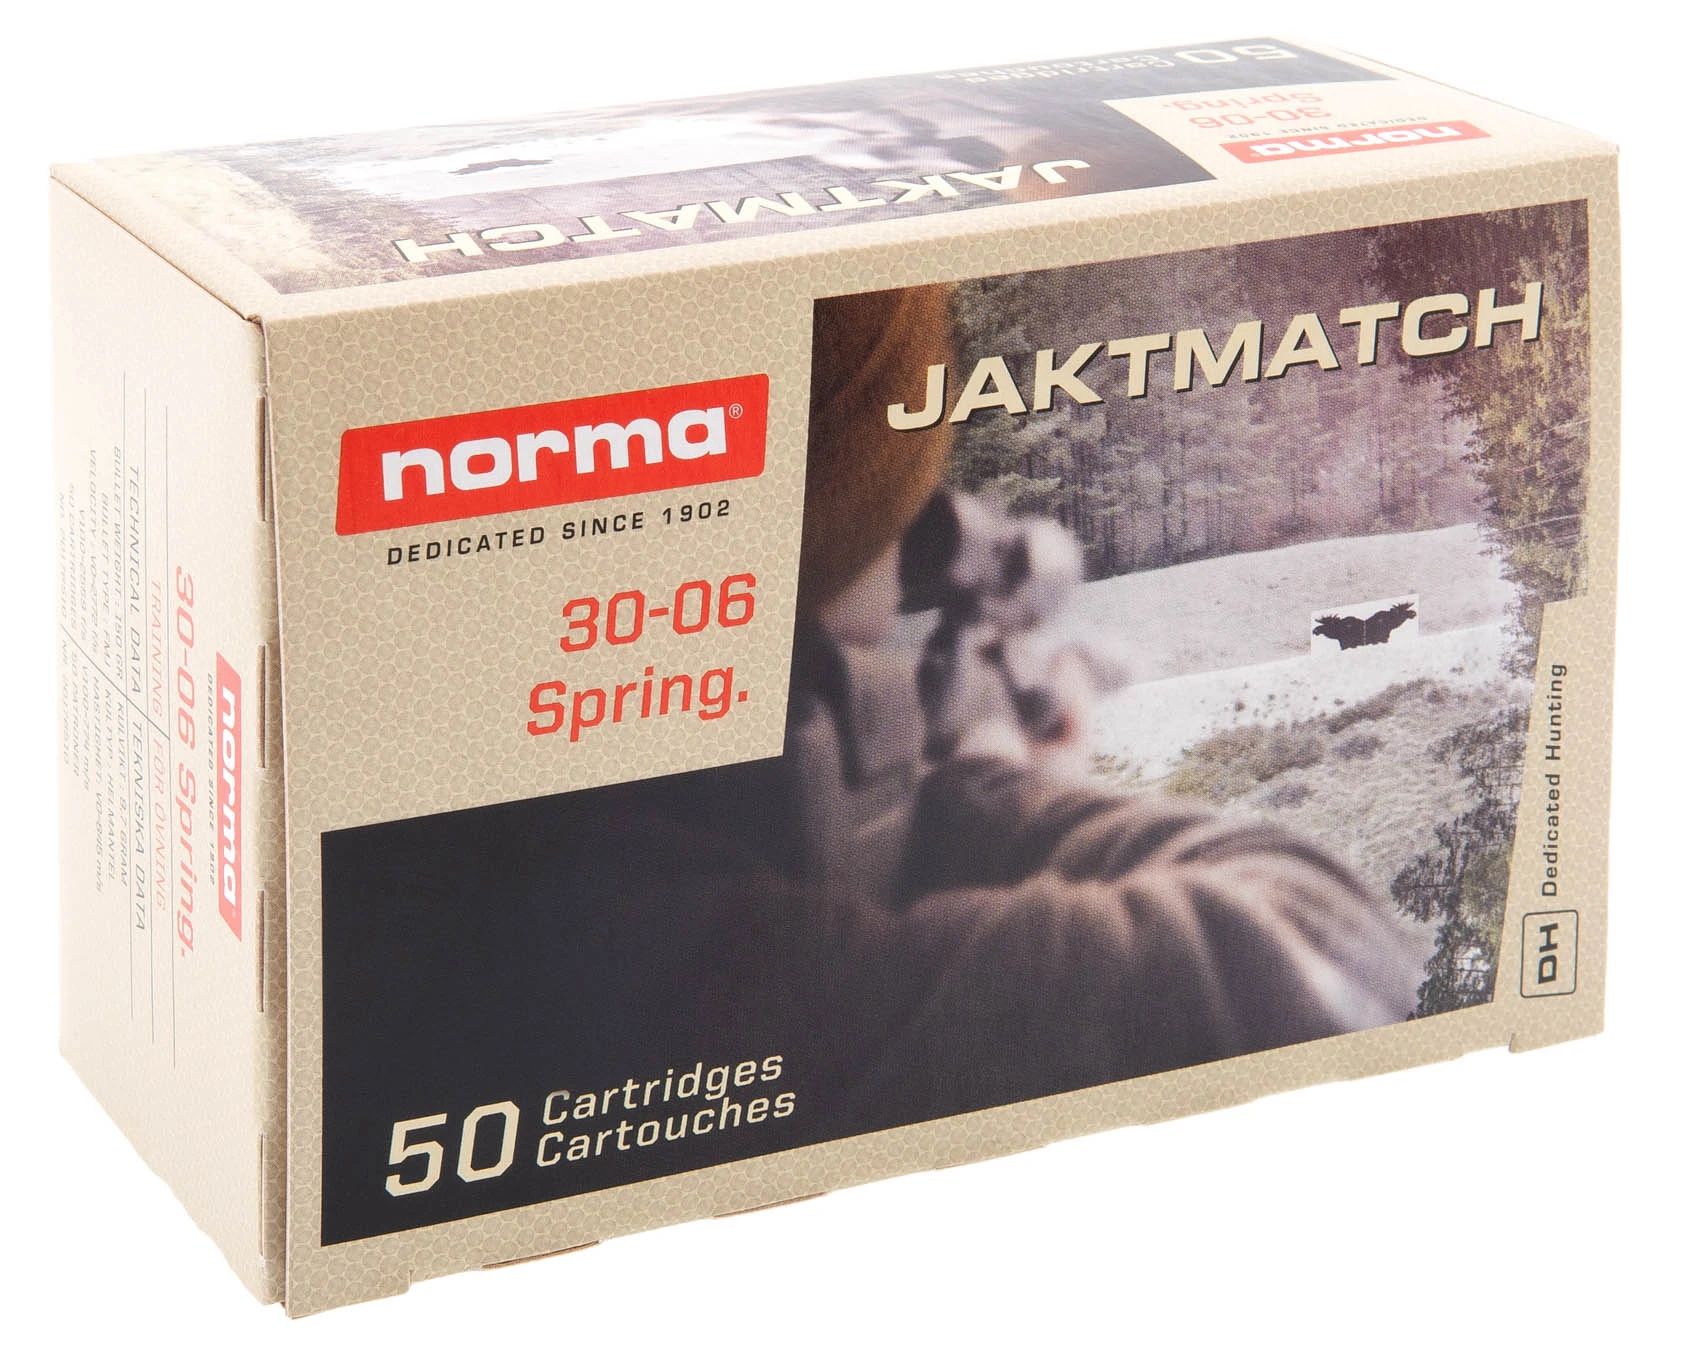 Норма июнь 22. Norma Jaktmatch 30-06 50 Cartridges cartouches. Norma 9.7 FMJ Jaktmatch. Гильзы Norma. Калибр 30 06 Norma.